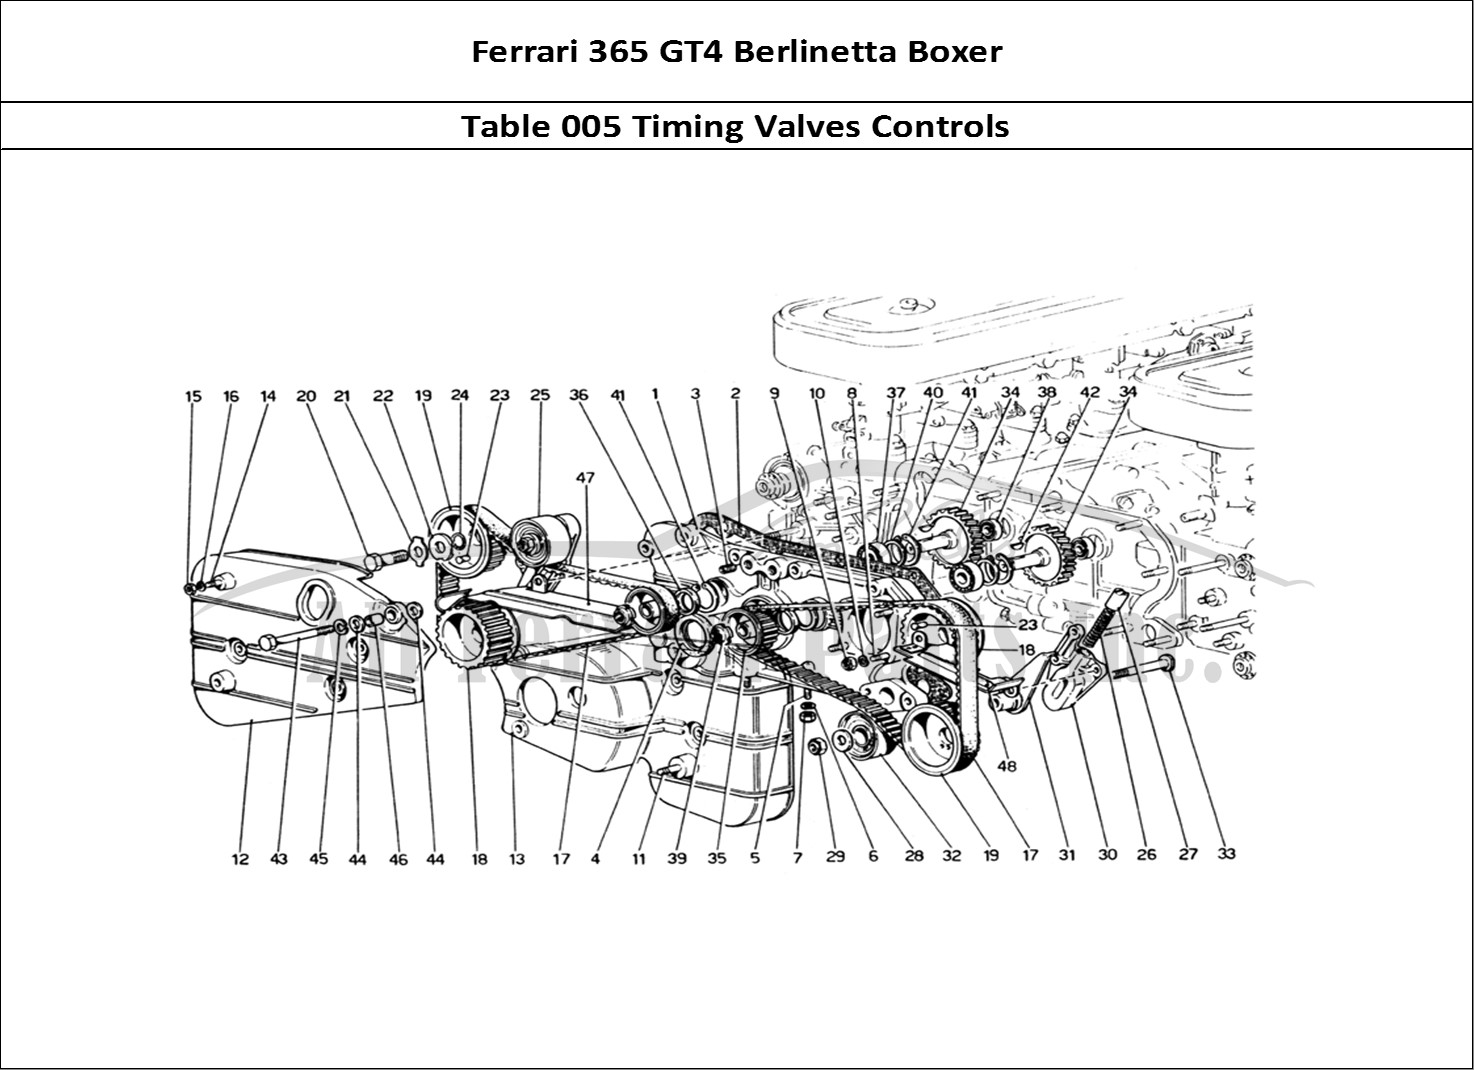 Ferrari Parts Ferrari 365 GT4 Berlinetta Boxer Page 005 Timing System - Controls